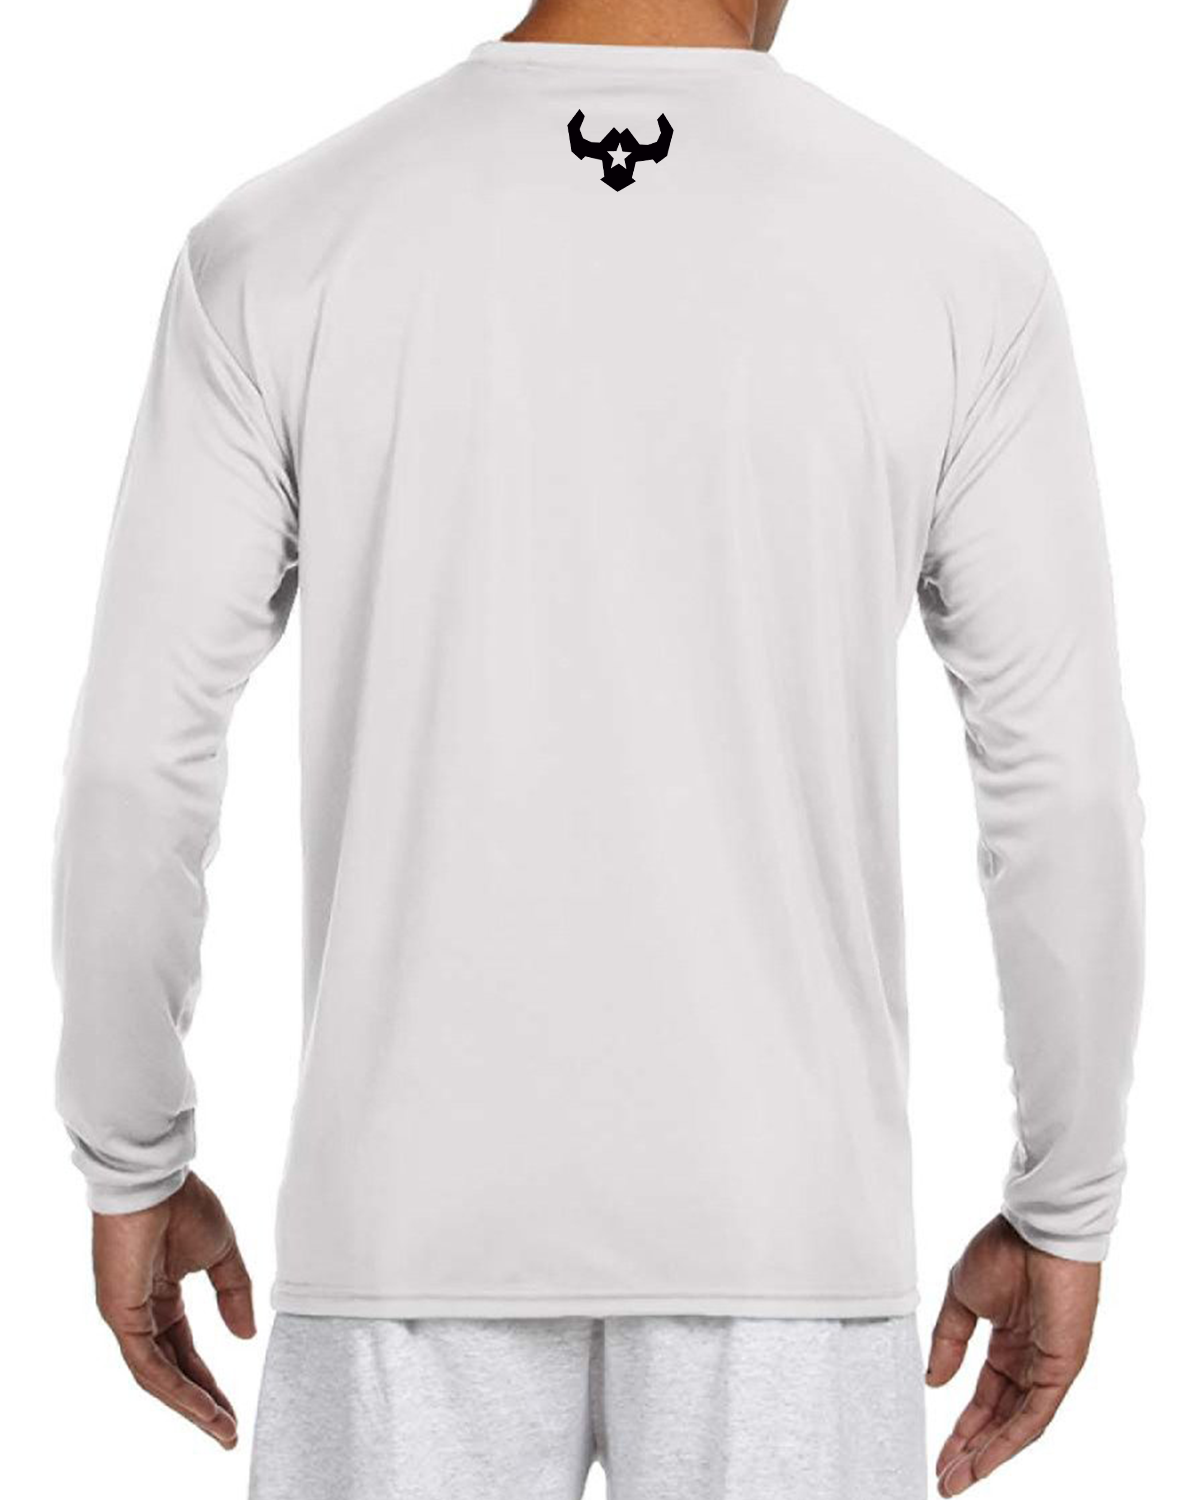 Affordable Custom Apparel Long Sleeve High Performance White VQRO Shirt